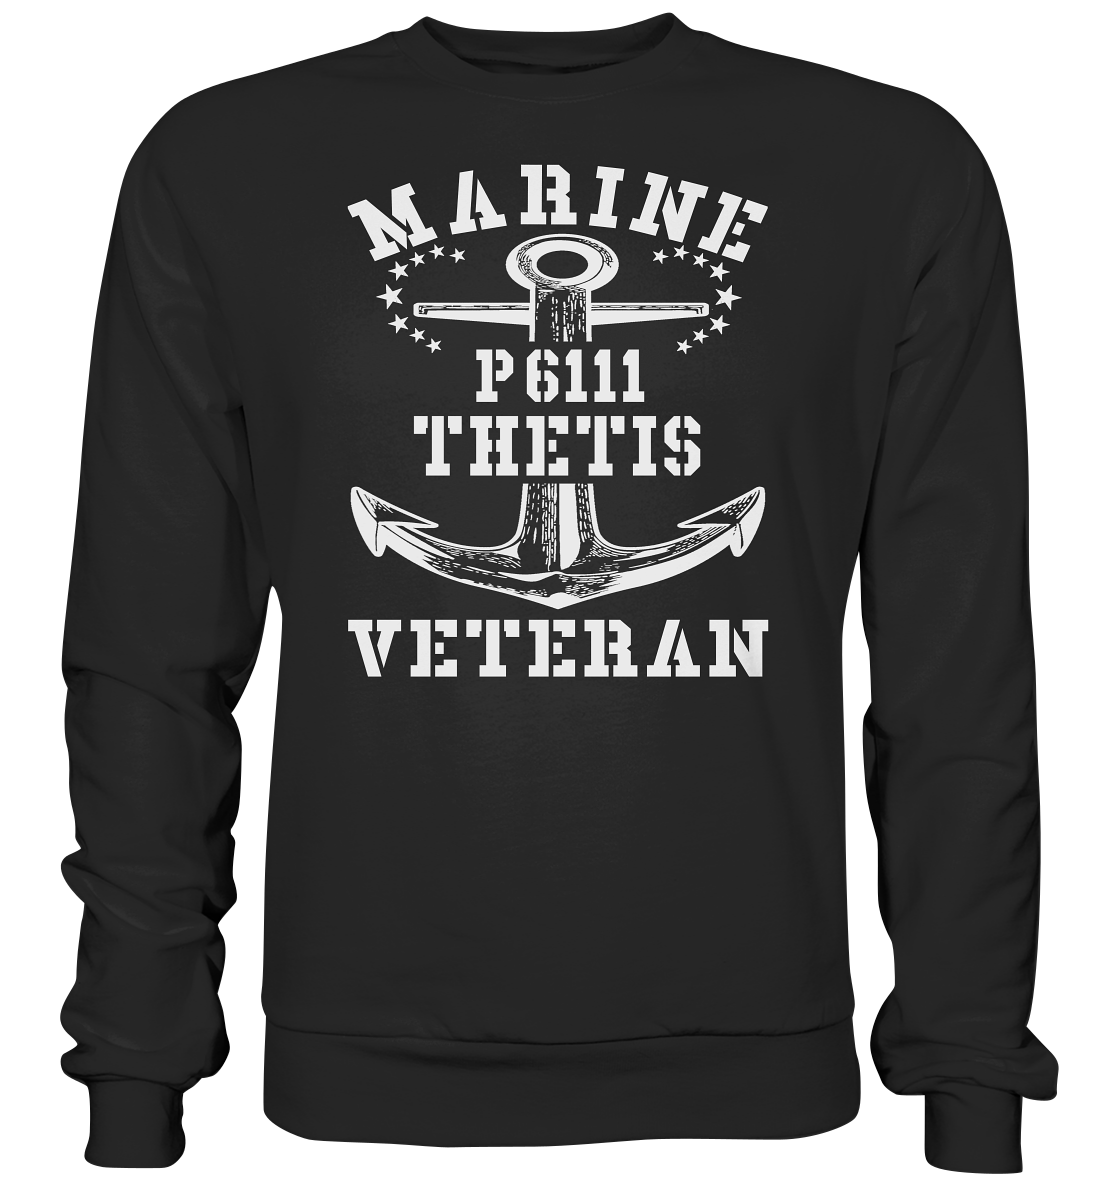 U-Jagdboot P6111 THETIS Marine Veteran - Premium Sweatshirt